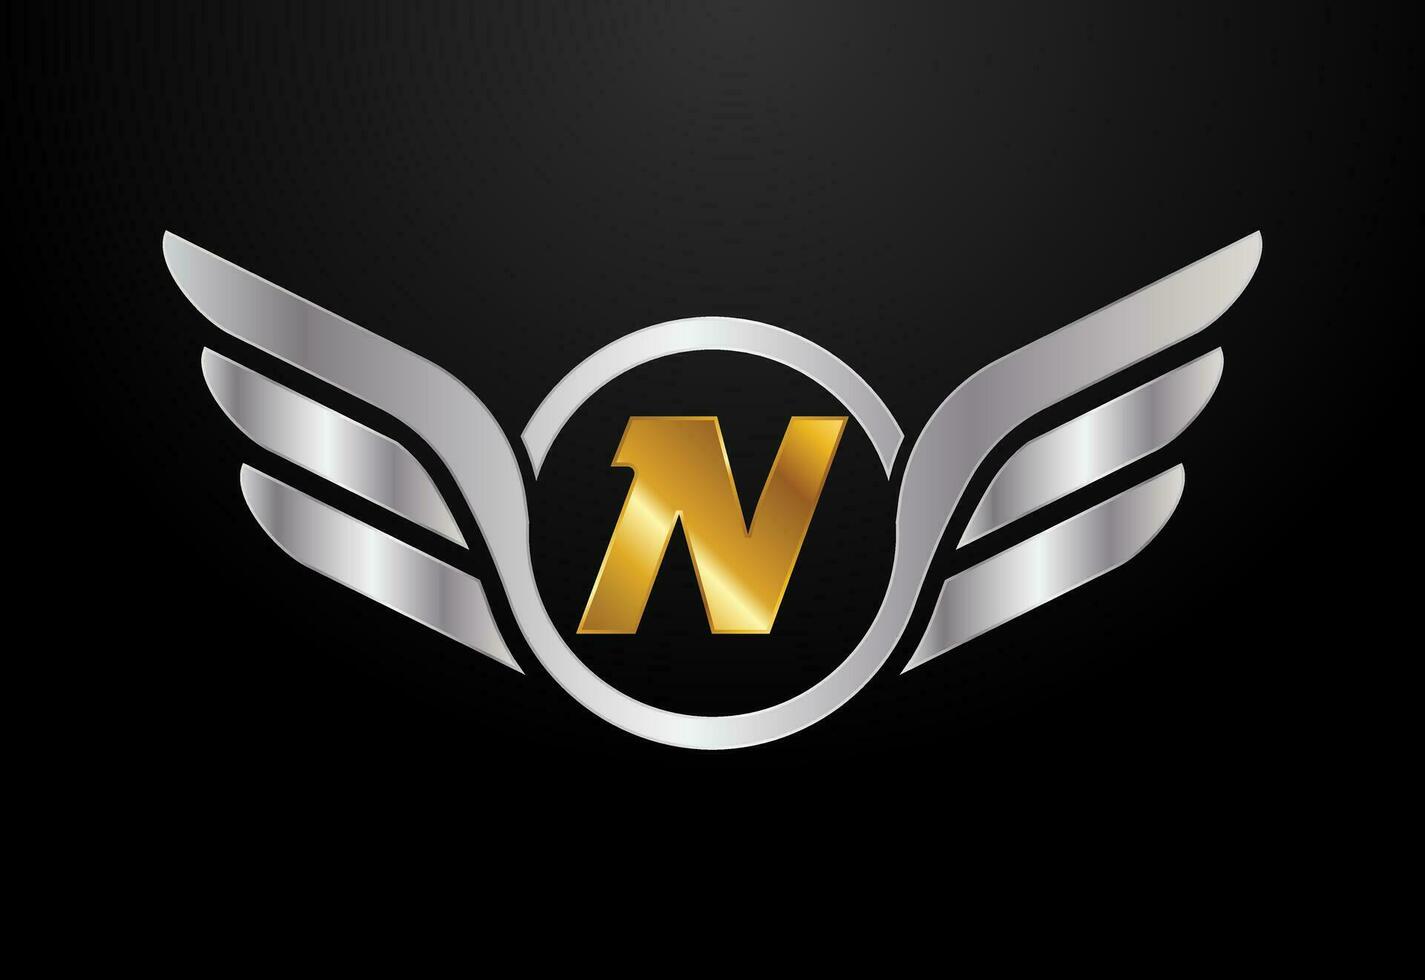 English alphabet N with wings logo design. Car and automotive vector logo concept